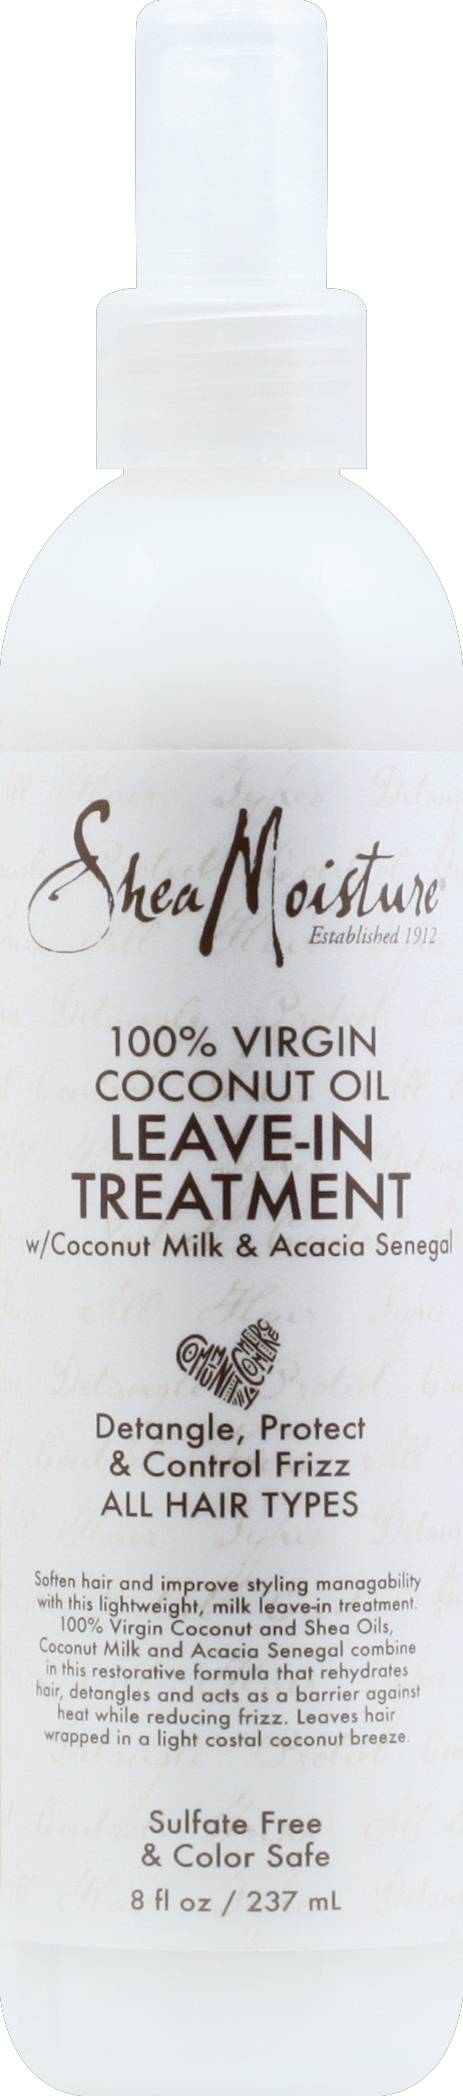 Shea Moisture 100% Virgin Coconut Oil Leave-In Treatment